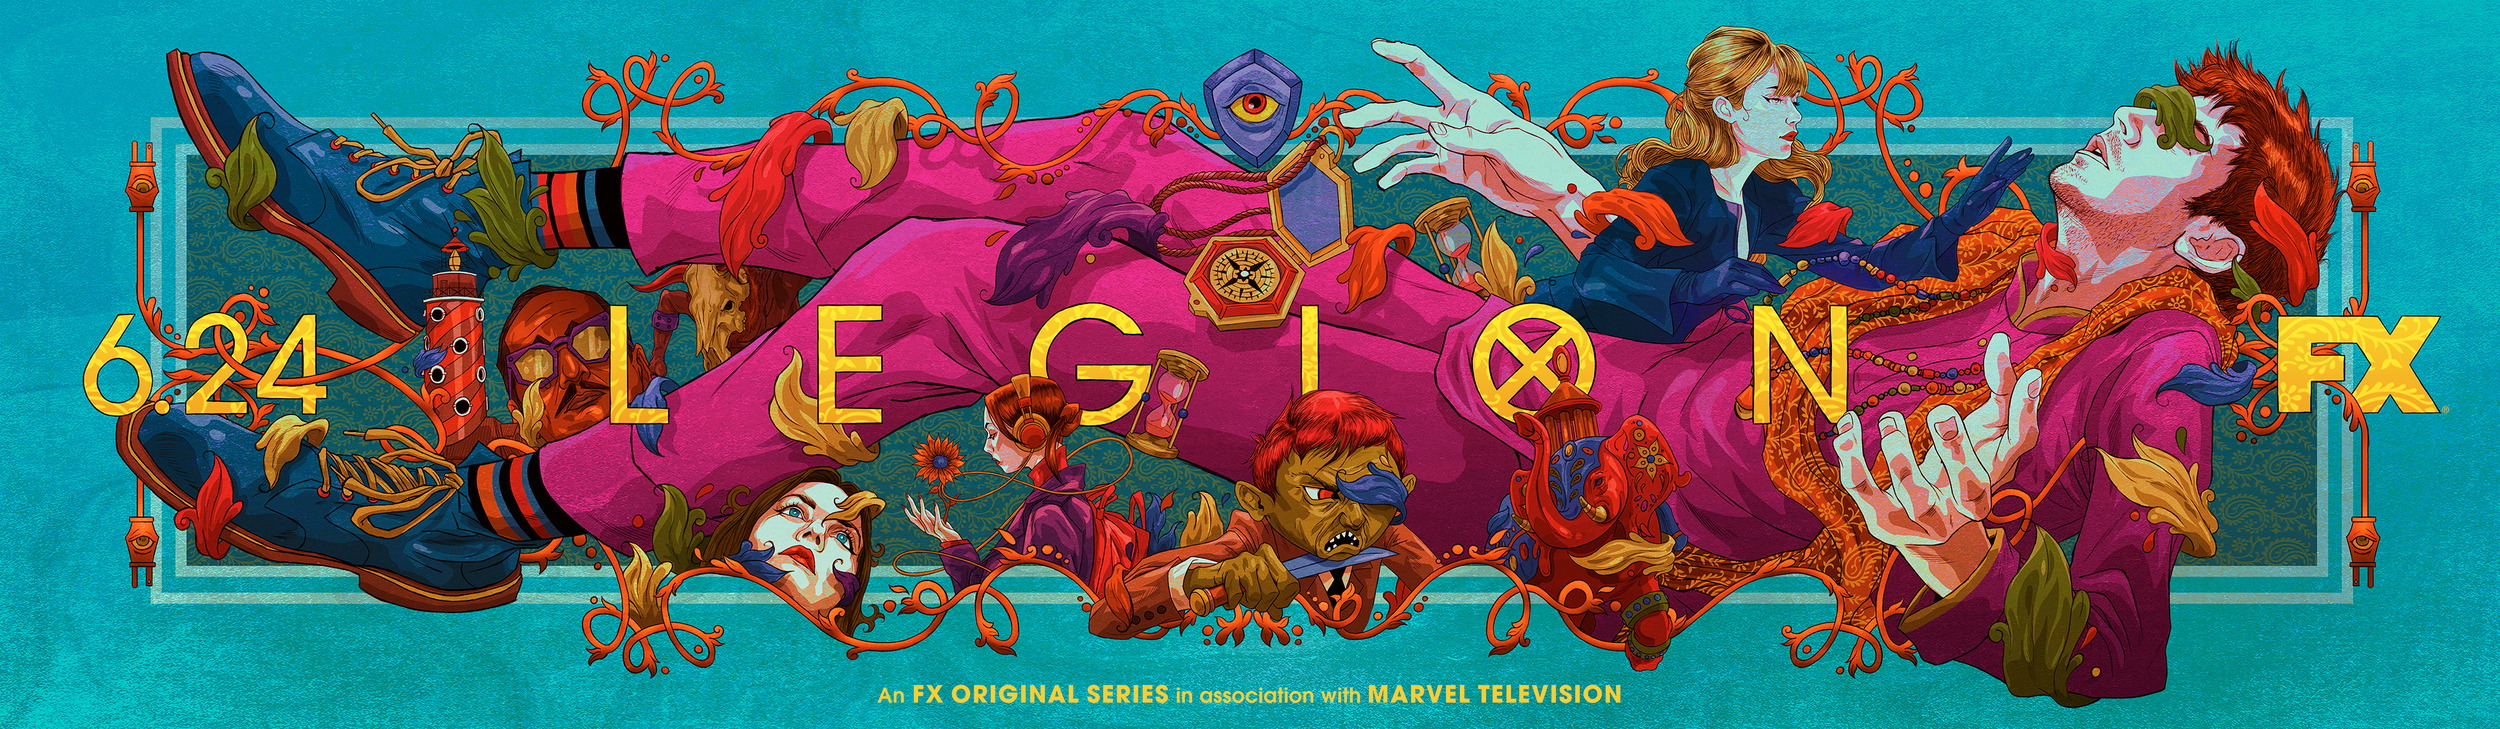 Mega Sized TV Poster Image for Legion (#7 of 16)